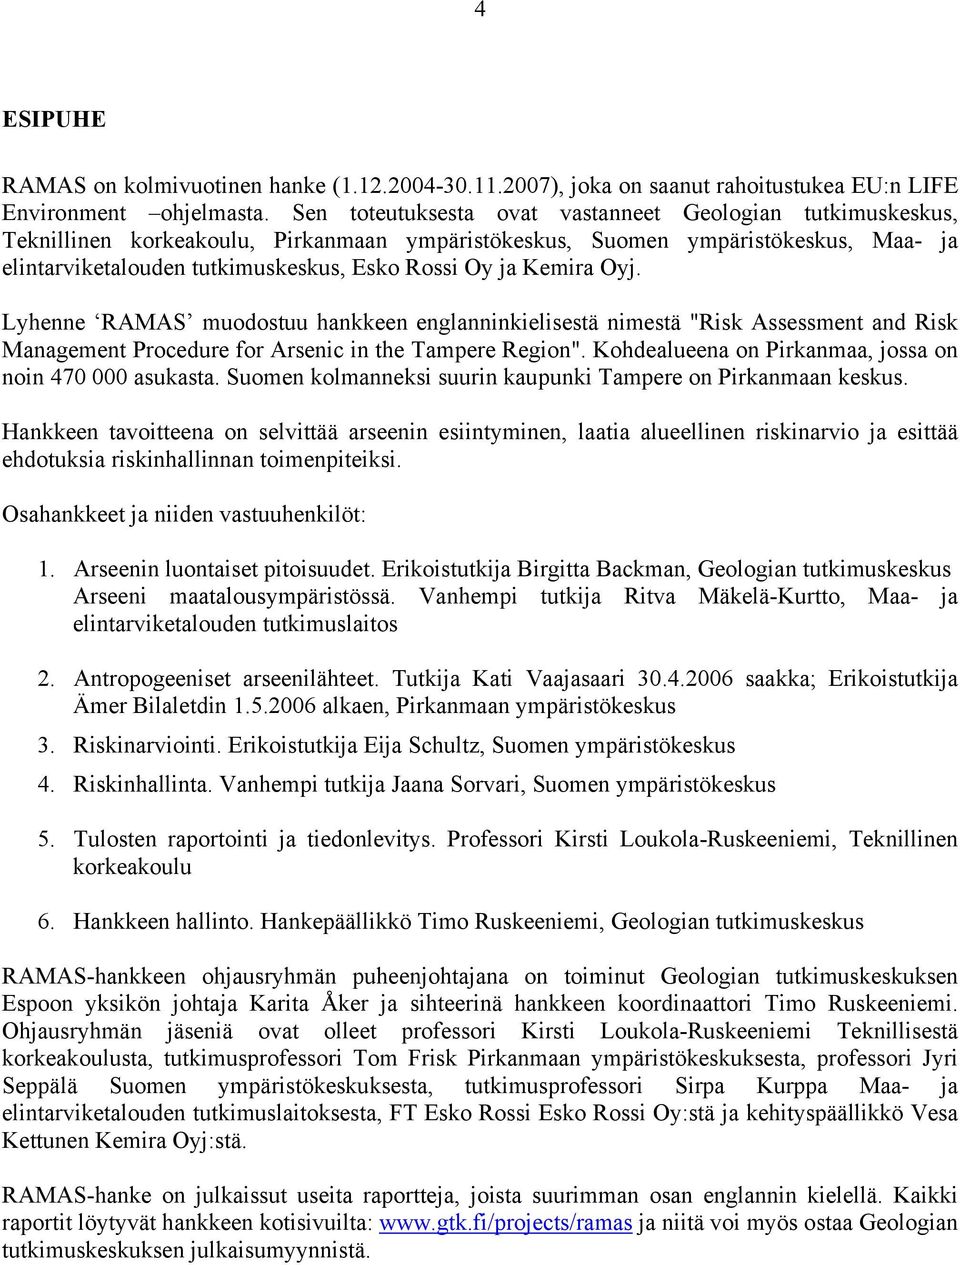 Kemira Oyj. Lyhenne RAMAS muodostuu hankkeen englanninkielisestä nimestä "Risk Assessment and Risk Management Procedure for Arsenic in the Tampere Region".